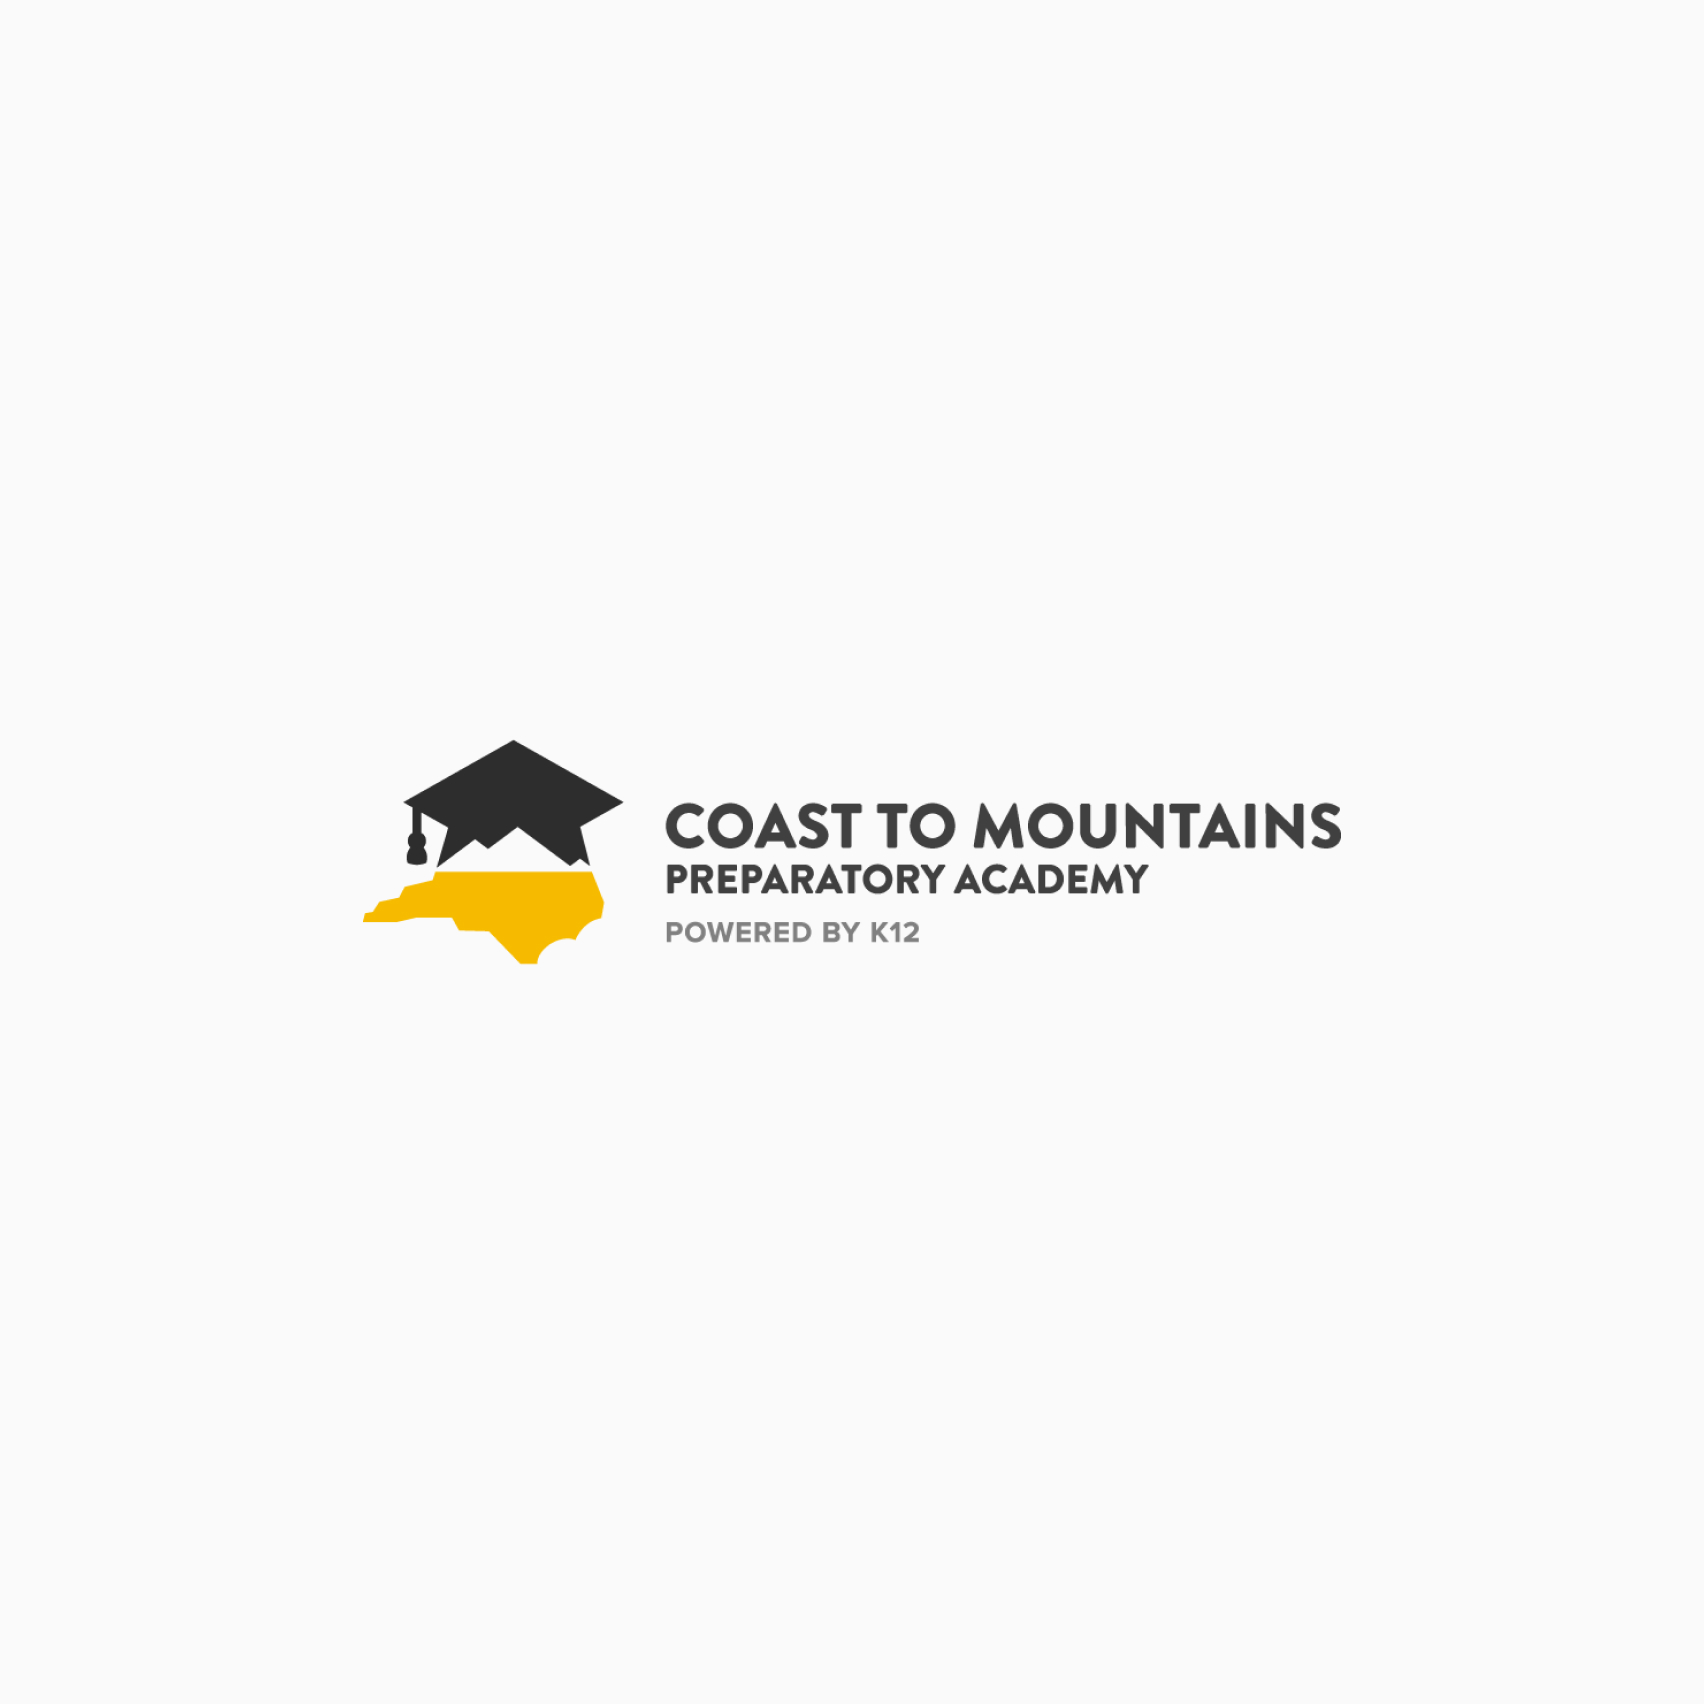 Escuelas privadas en línea imagen 21 (nombre Coast to Mountains)